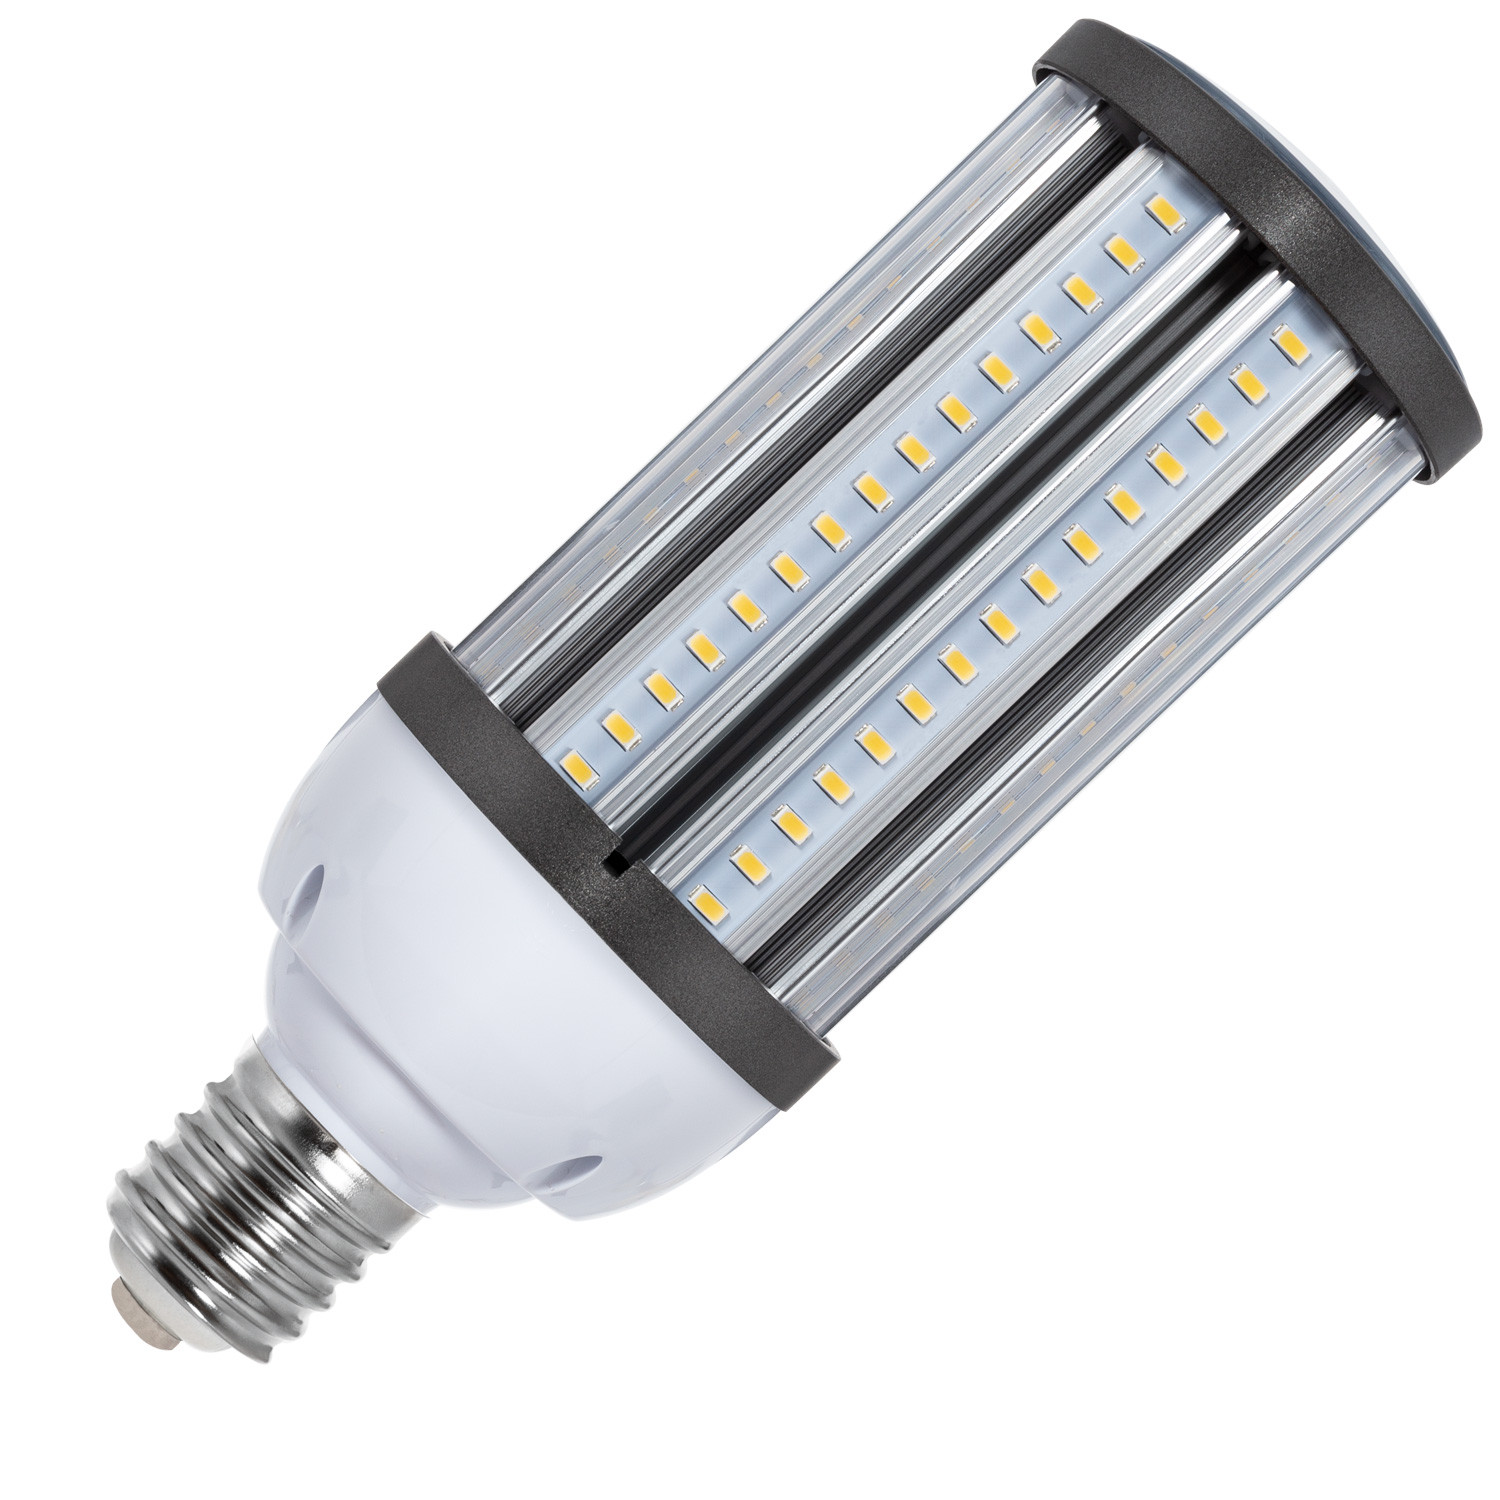 LED Lamp E40 40W IP64 voor Openbare Ledkia